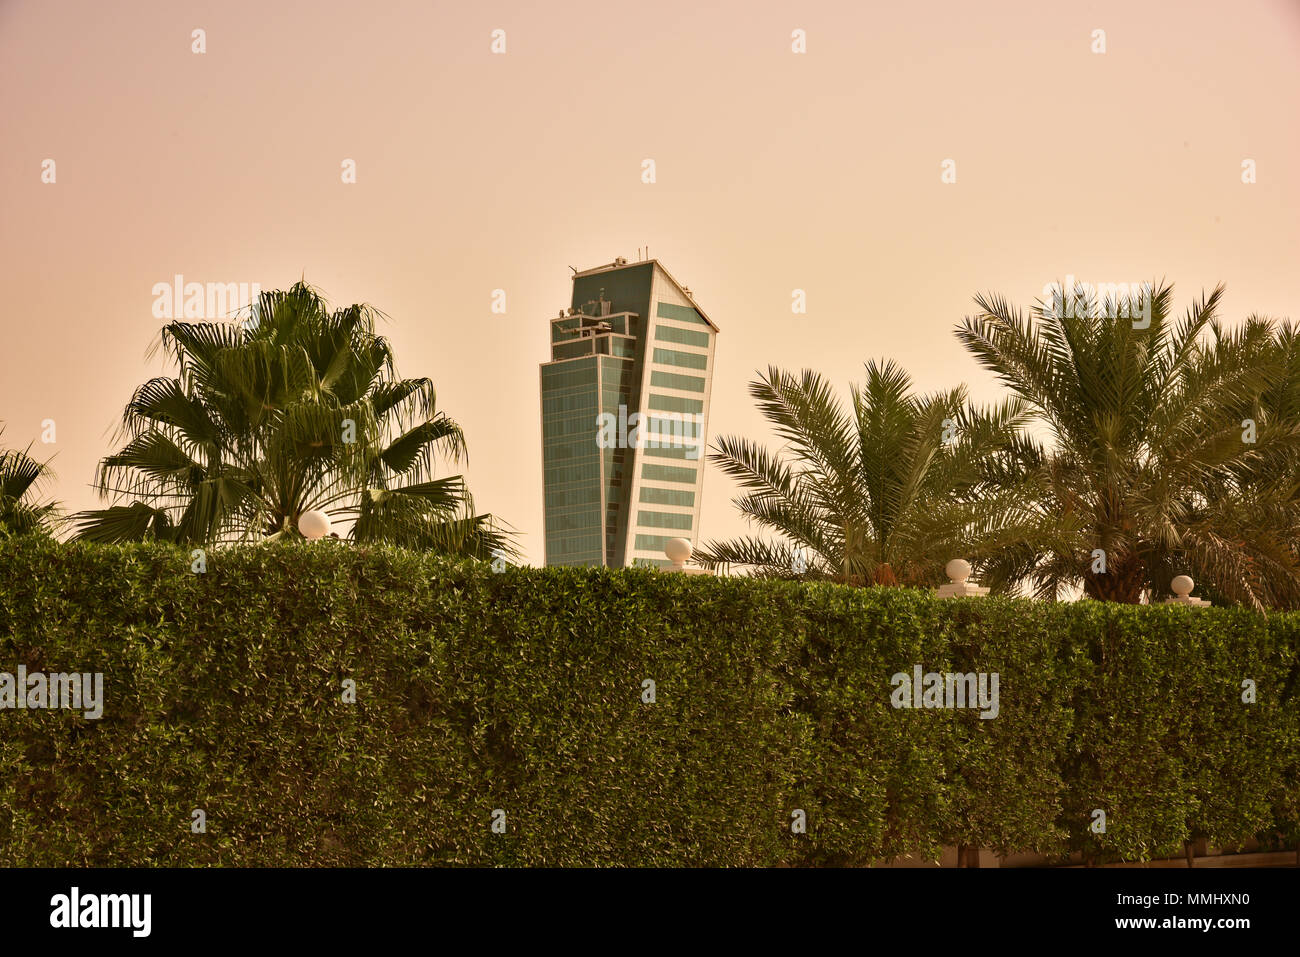 Gratte-ciel le long de l'avenue King Fahad road, Riyadh, Arabie saoudite. Banque D'Images